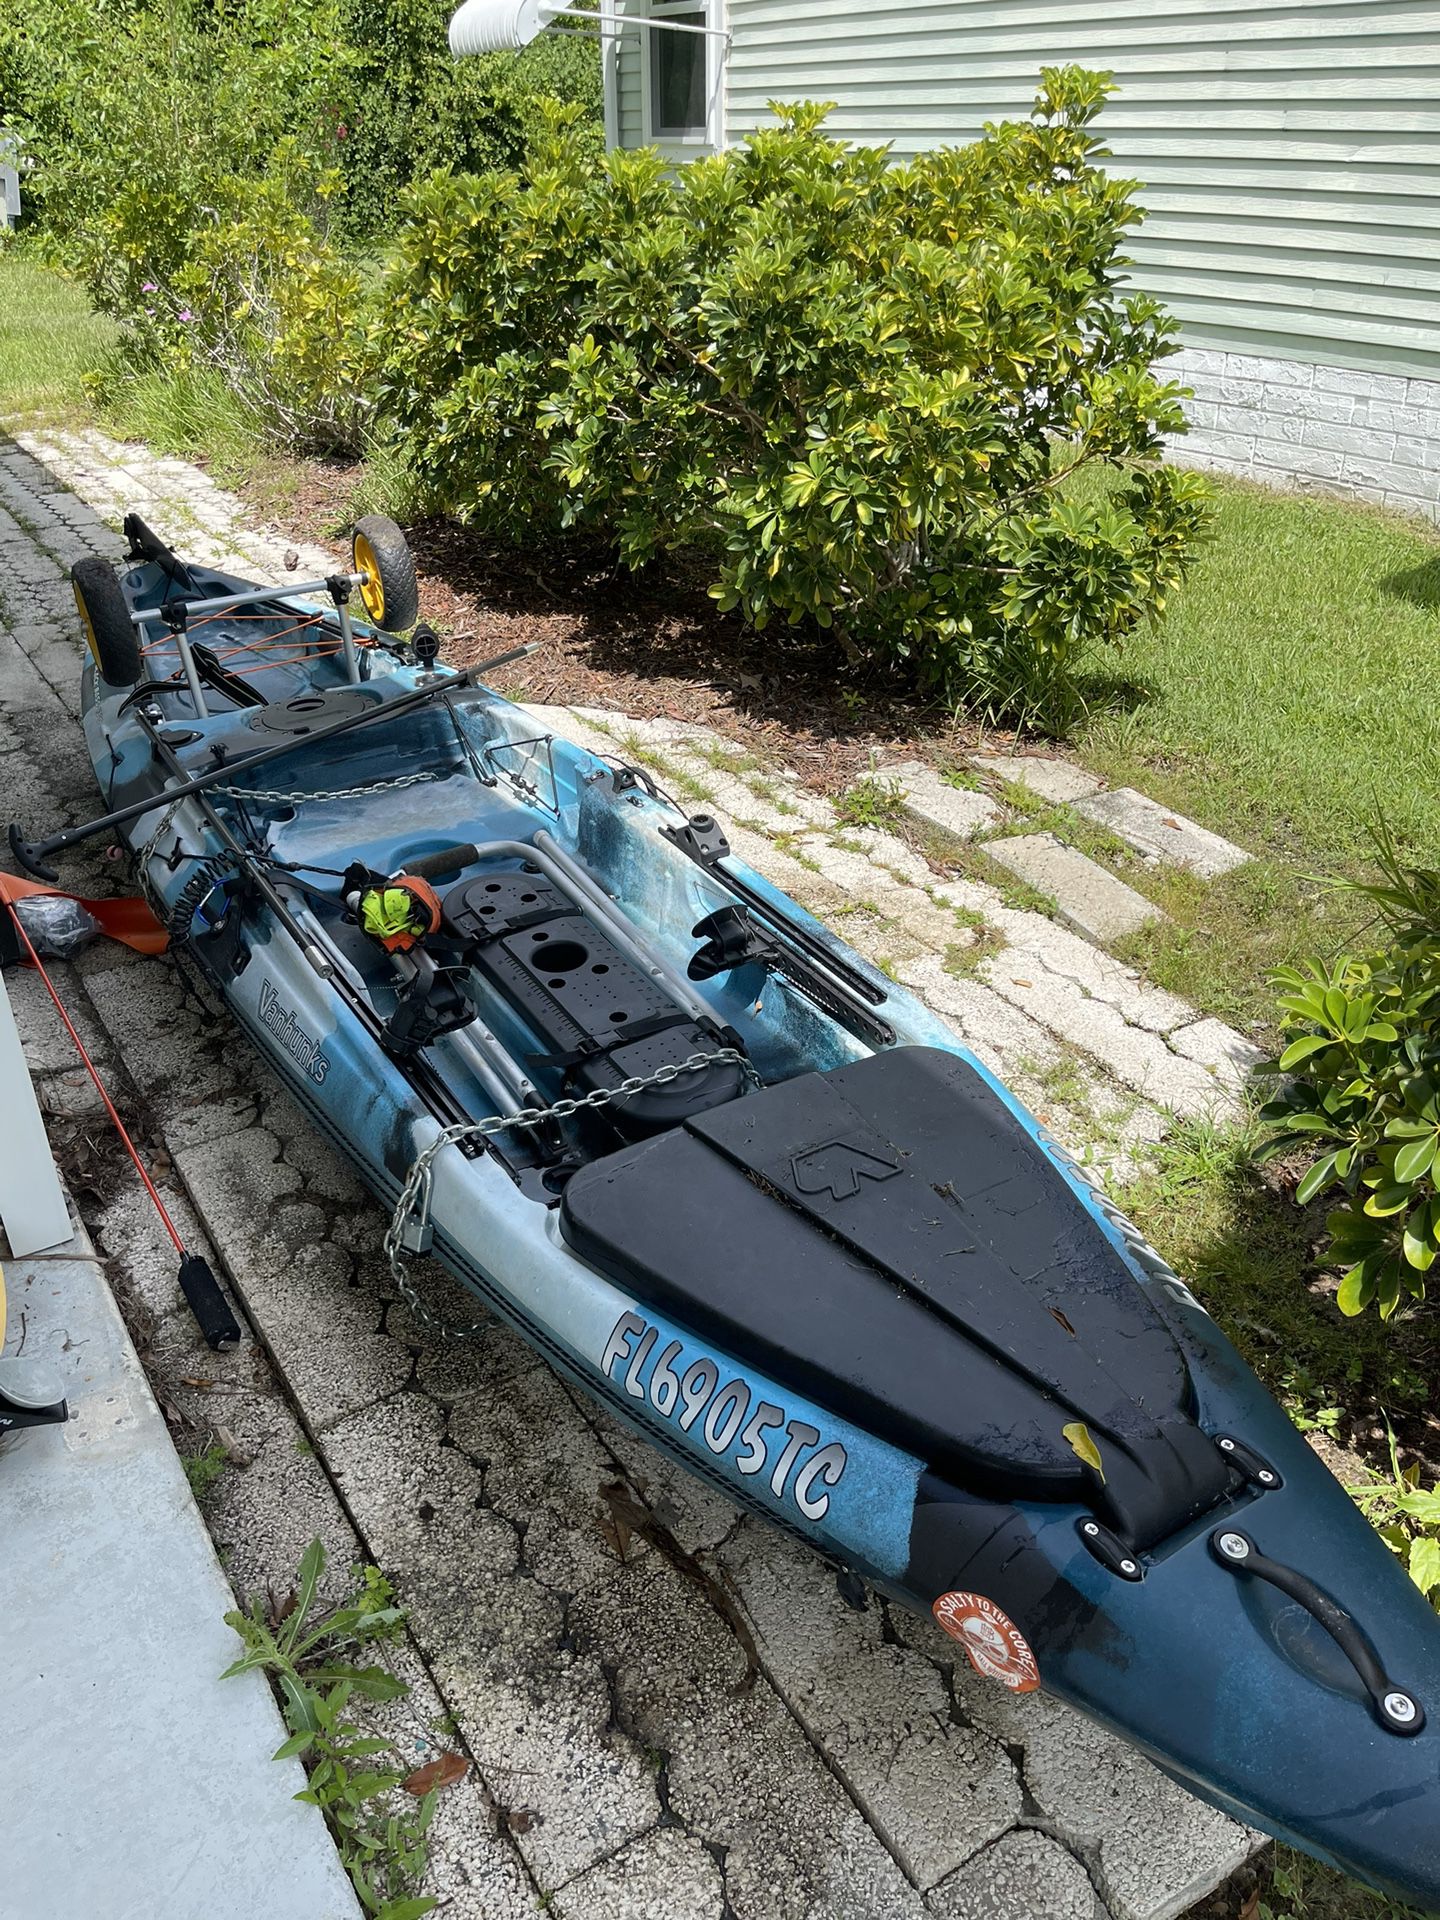 Vanhunks Black Bass Fishing Kayak for Sale in Fort Pierce, FL - OfferUp